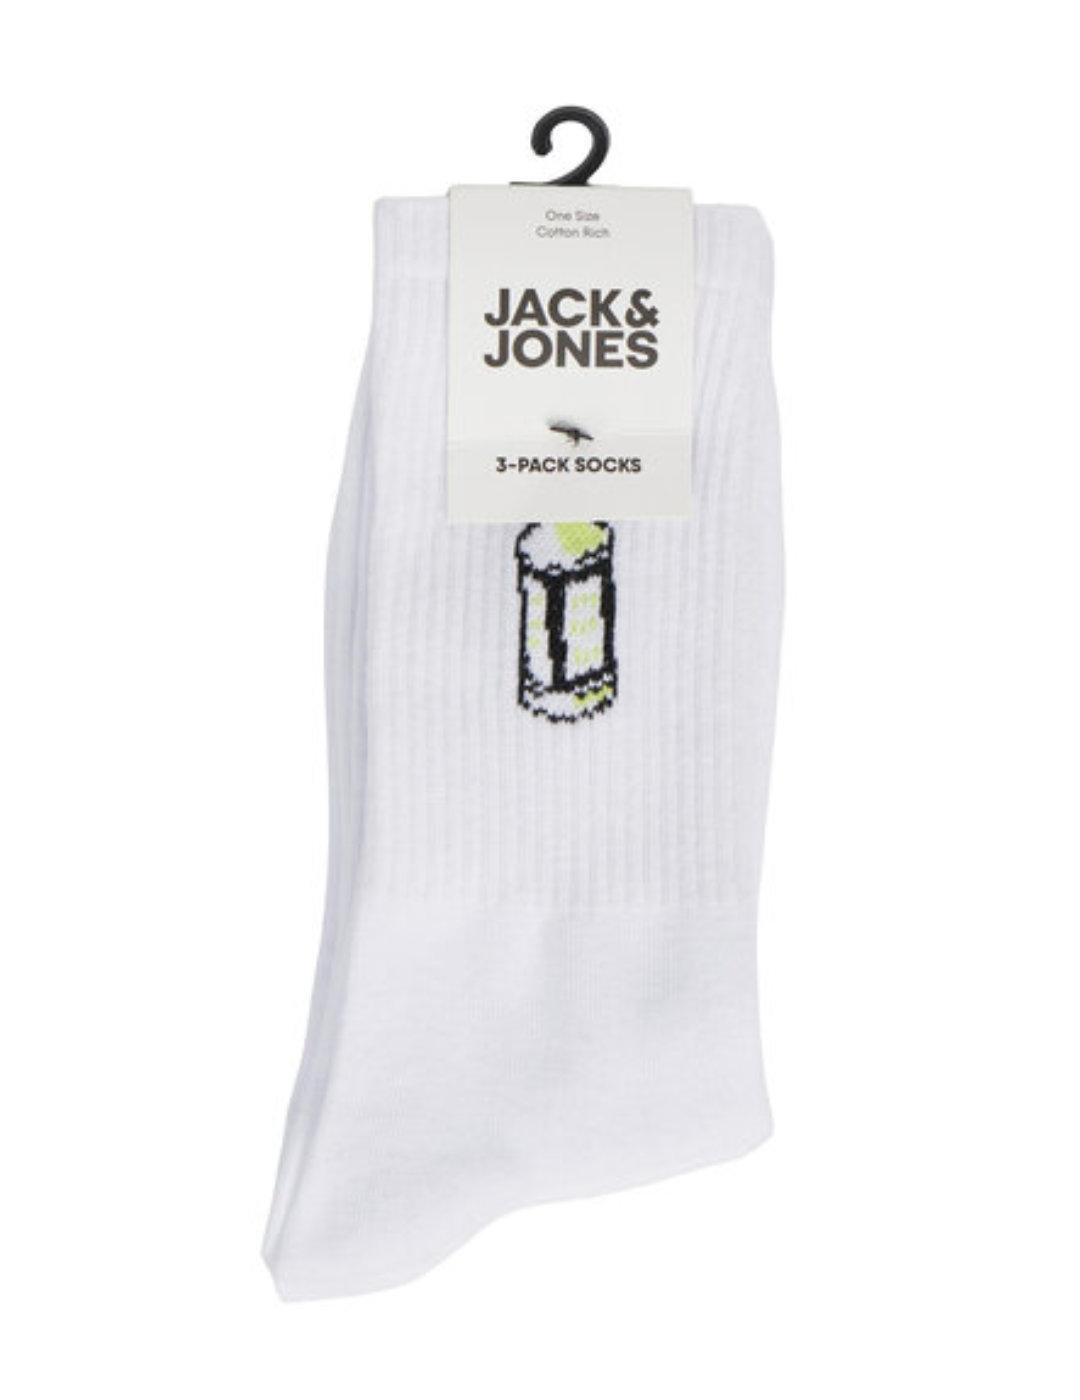 Calcetines Jack&Jones Rock pack3 blancos altos hombre